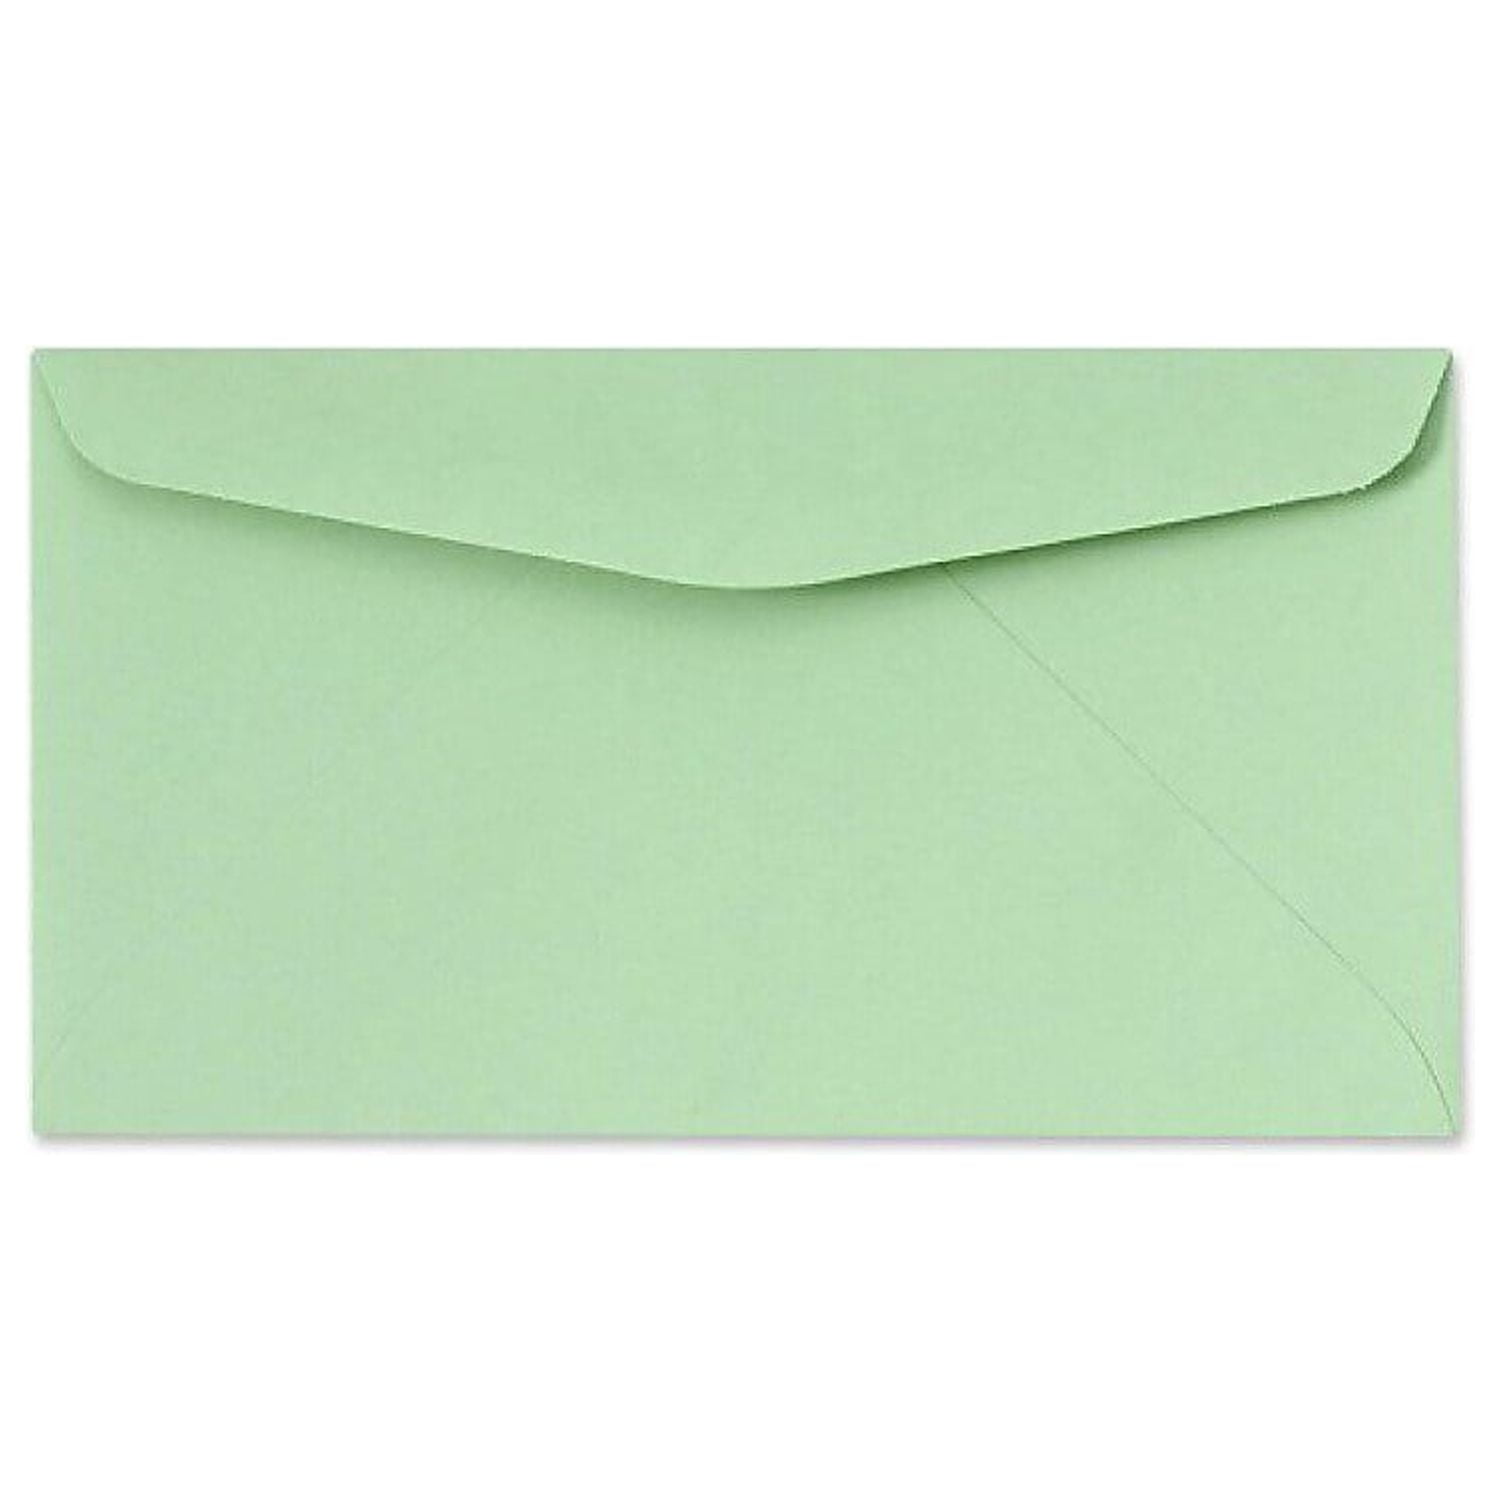 Lux 3 5/8 inch x 6 1/2 inch #6 3/4 60lbs. Regular Envelopes Pastel Green 72652-50